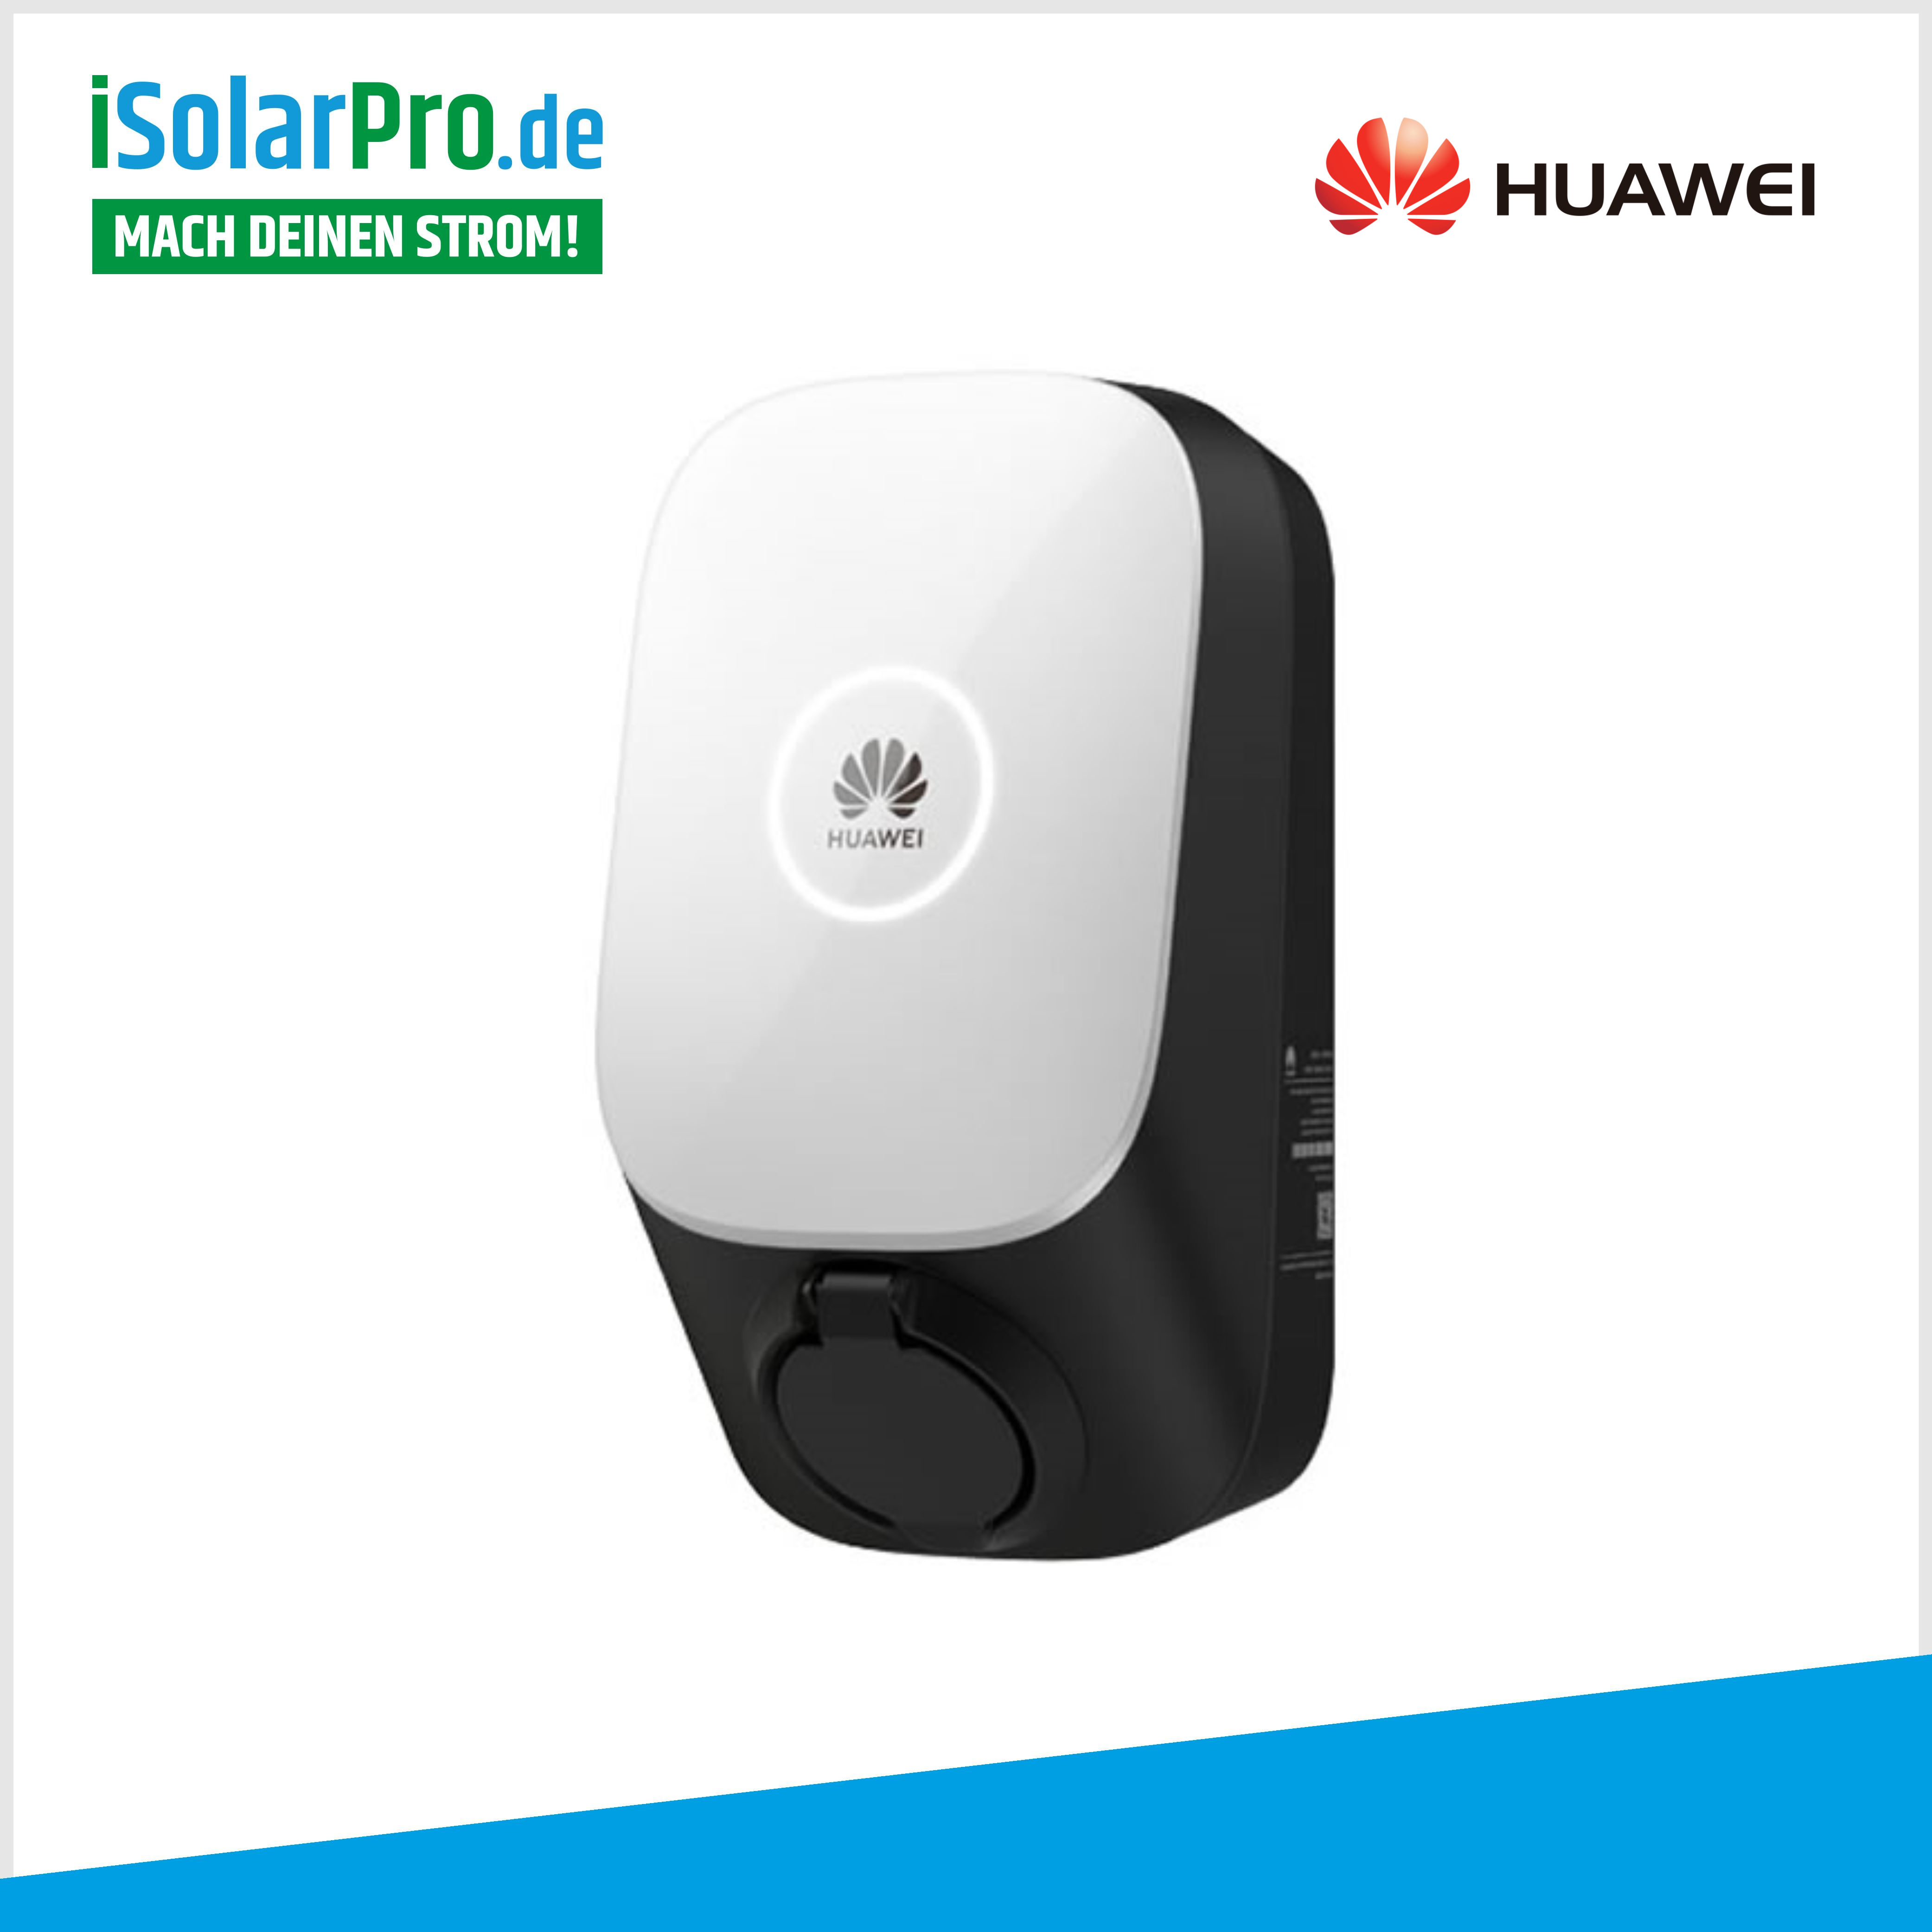 10kW solar system set Huawei inverter + storage + wallbox +24x 415W Trina Full Black solar modules